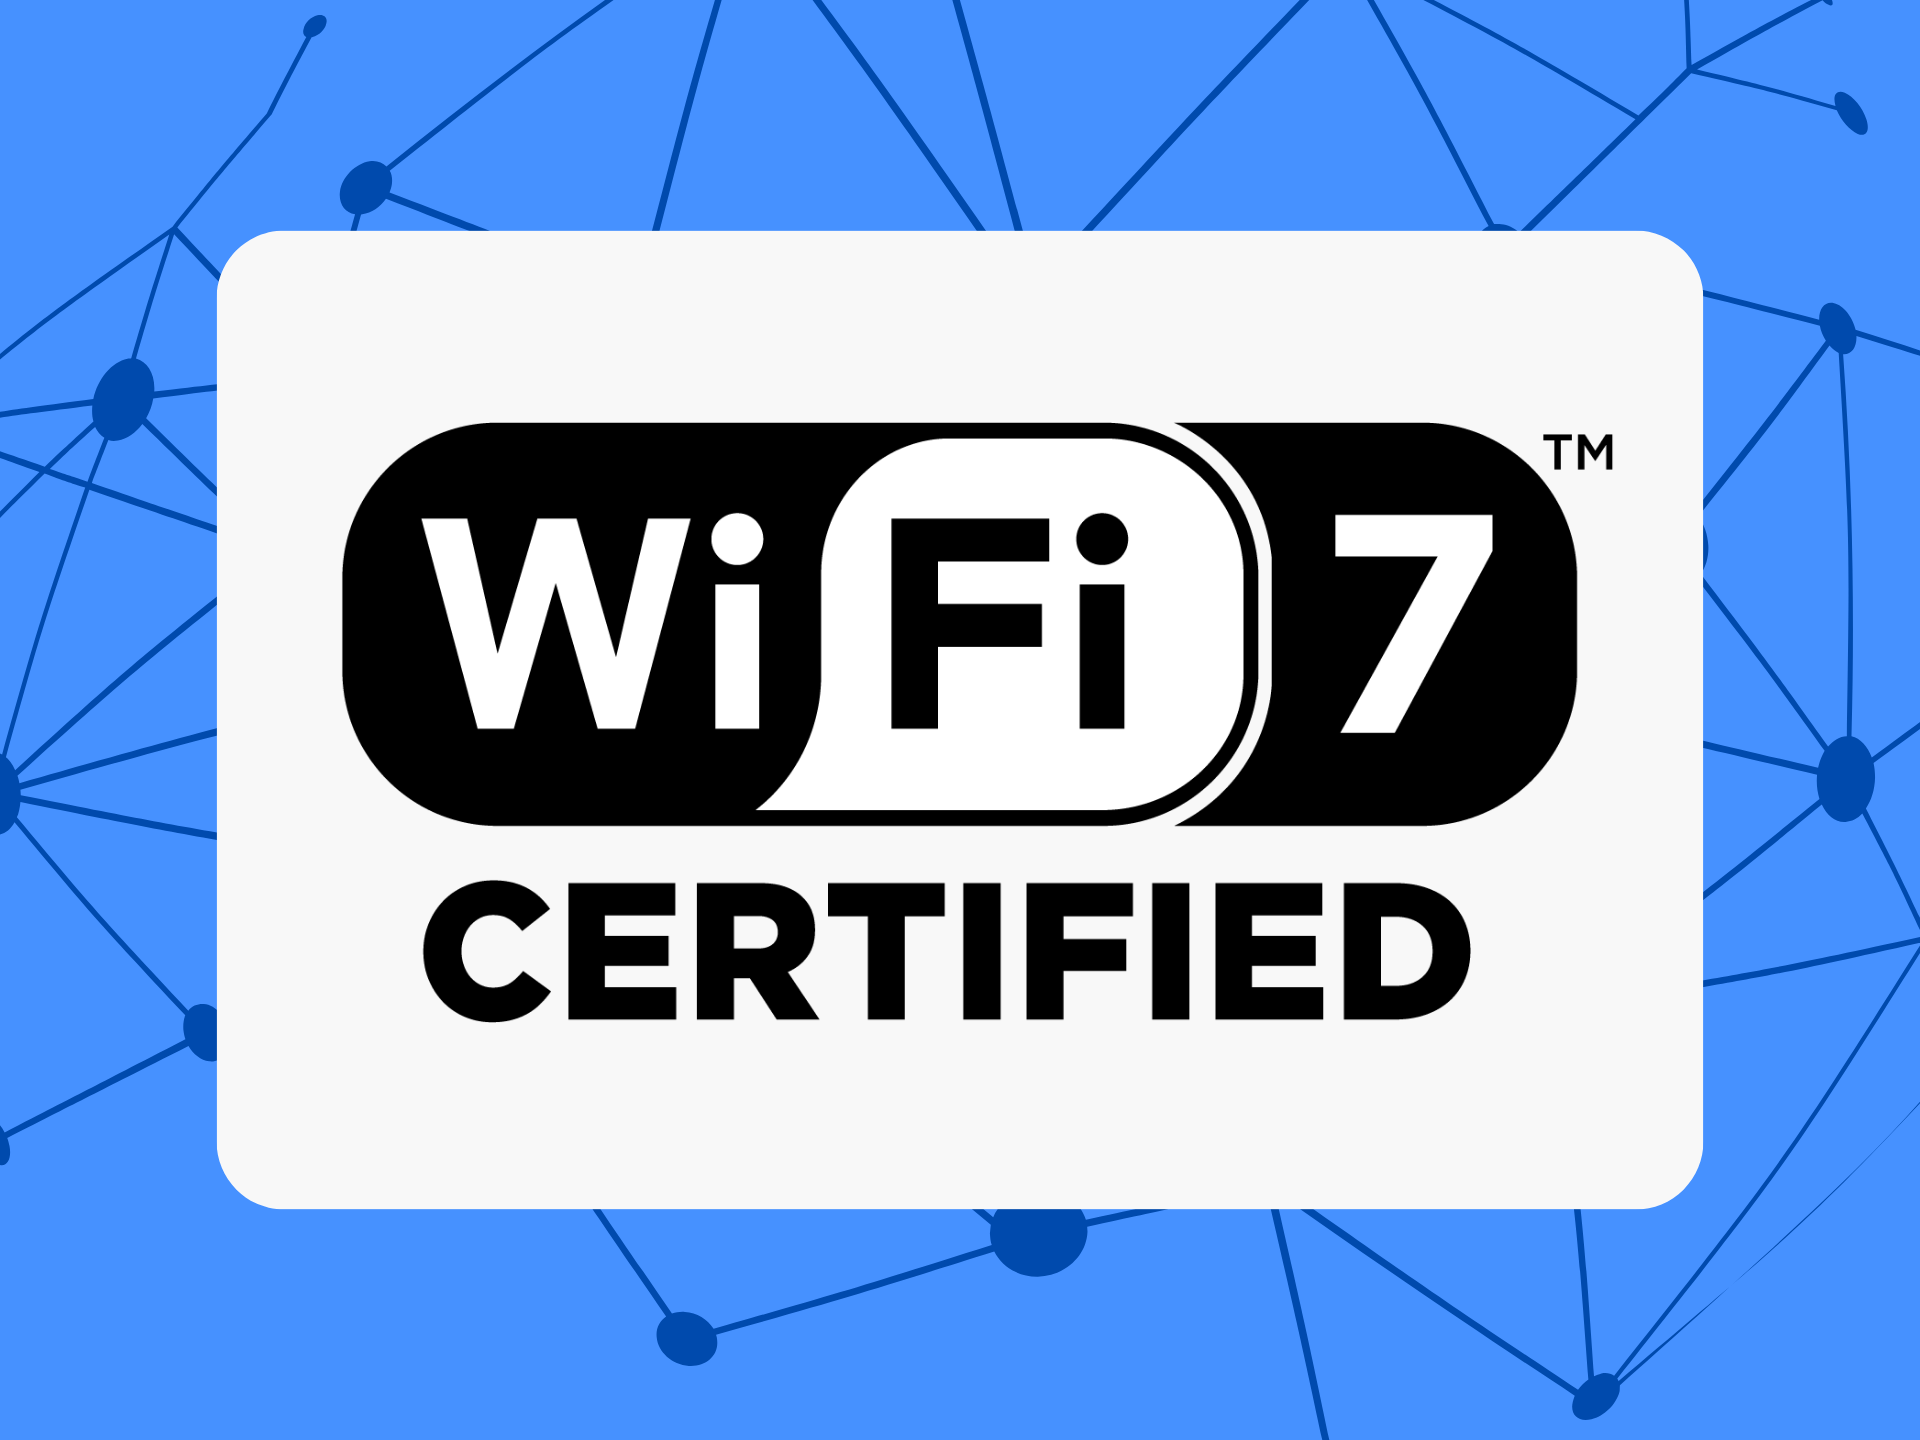 li-wi-fi-certified-7-wi-fi-7